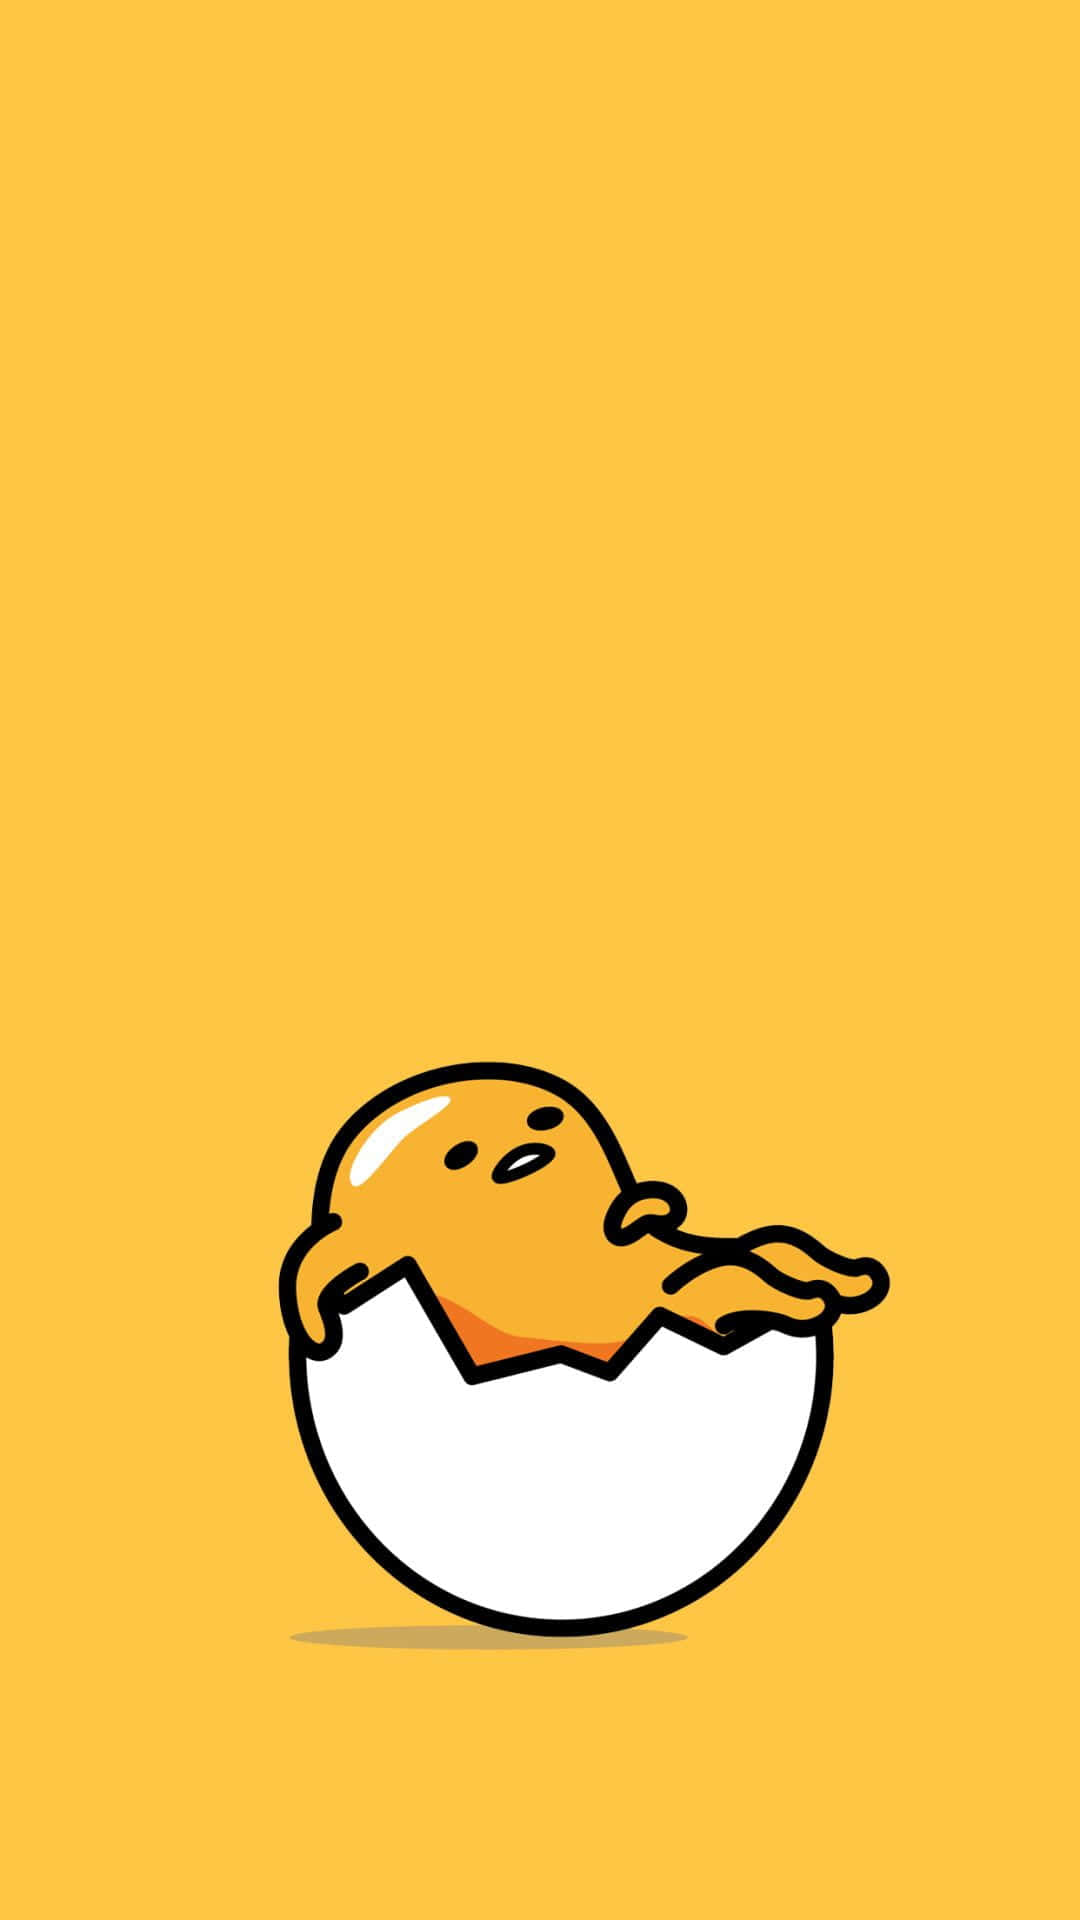 Relaxed Egg Character Illustration Wallpaper